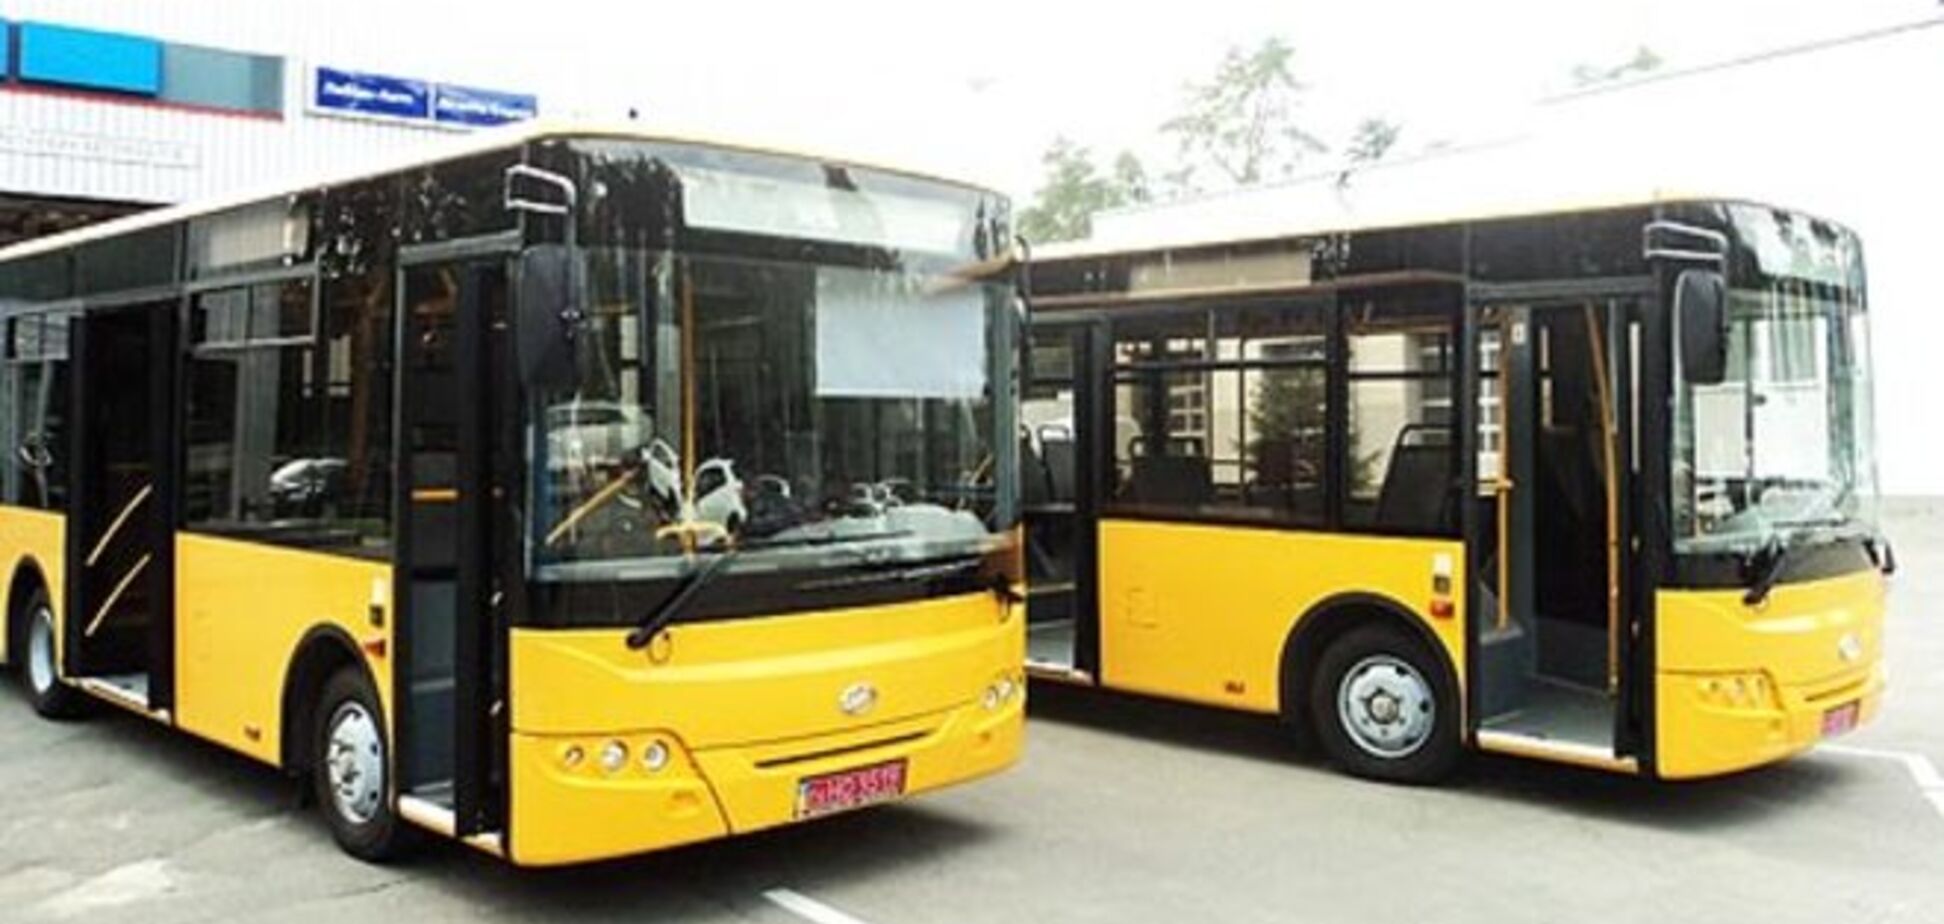 ЗАЗ представил новый маршрутный автобус